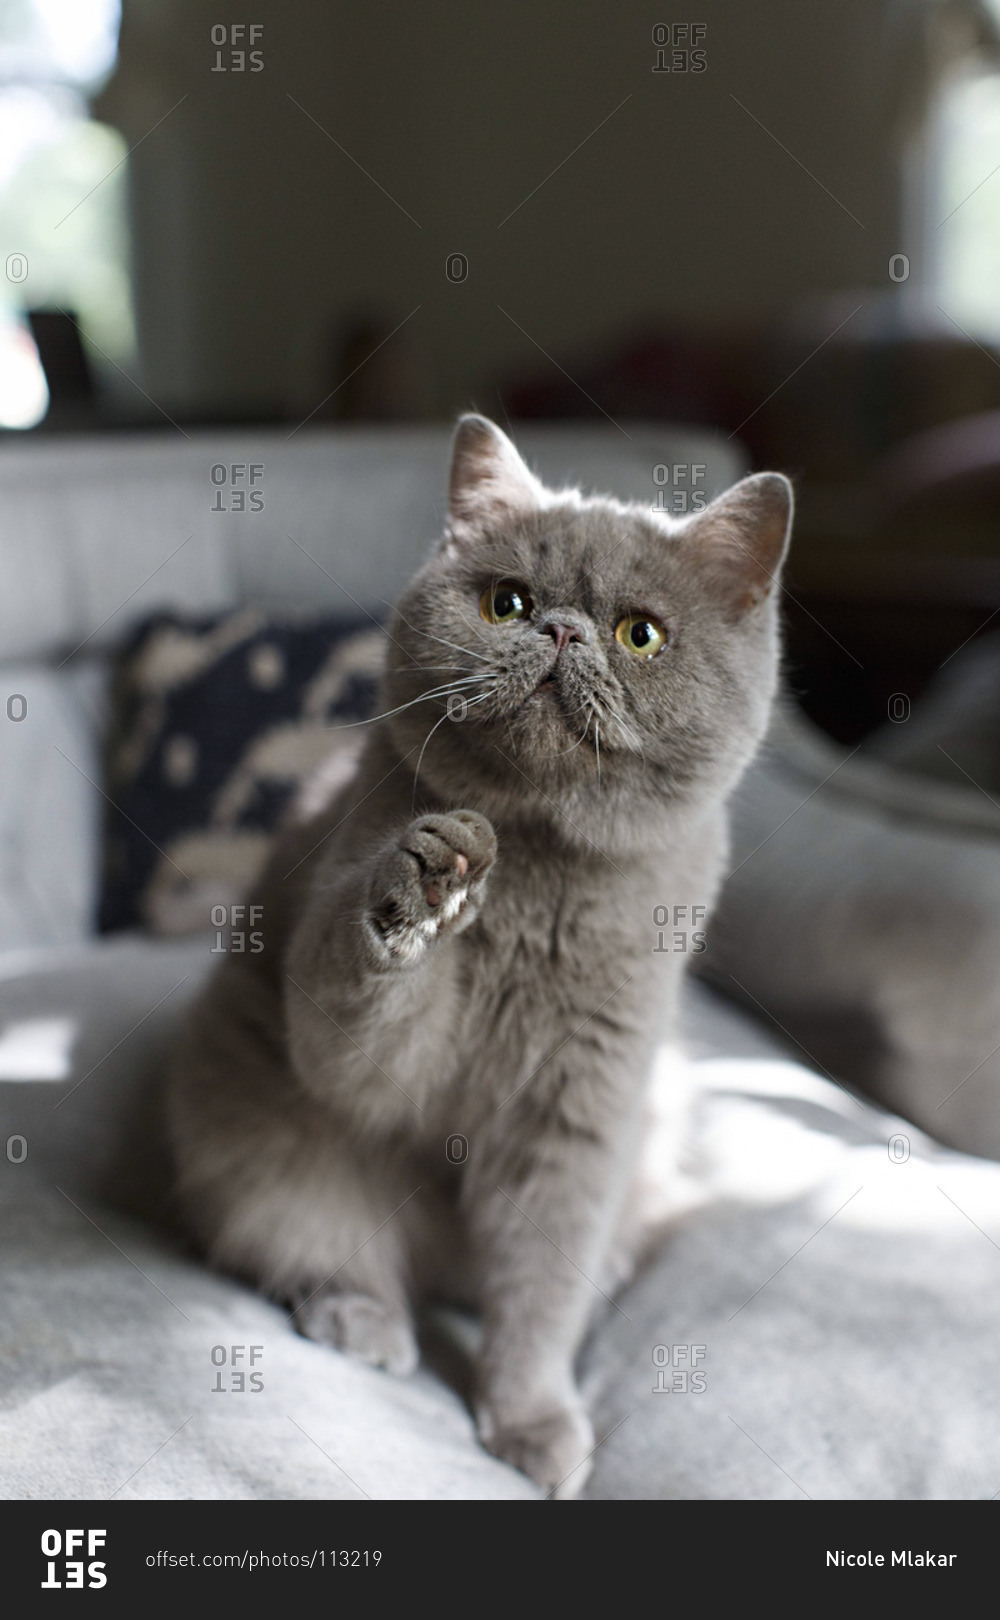 Grey Exotic Shorthair cat raising its paw